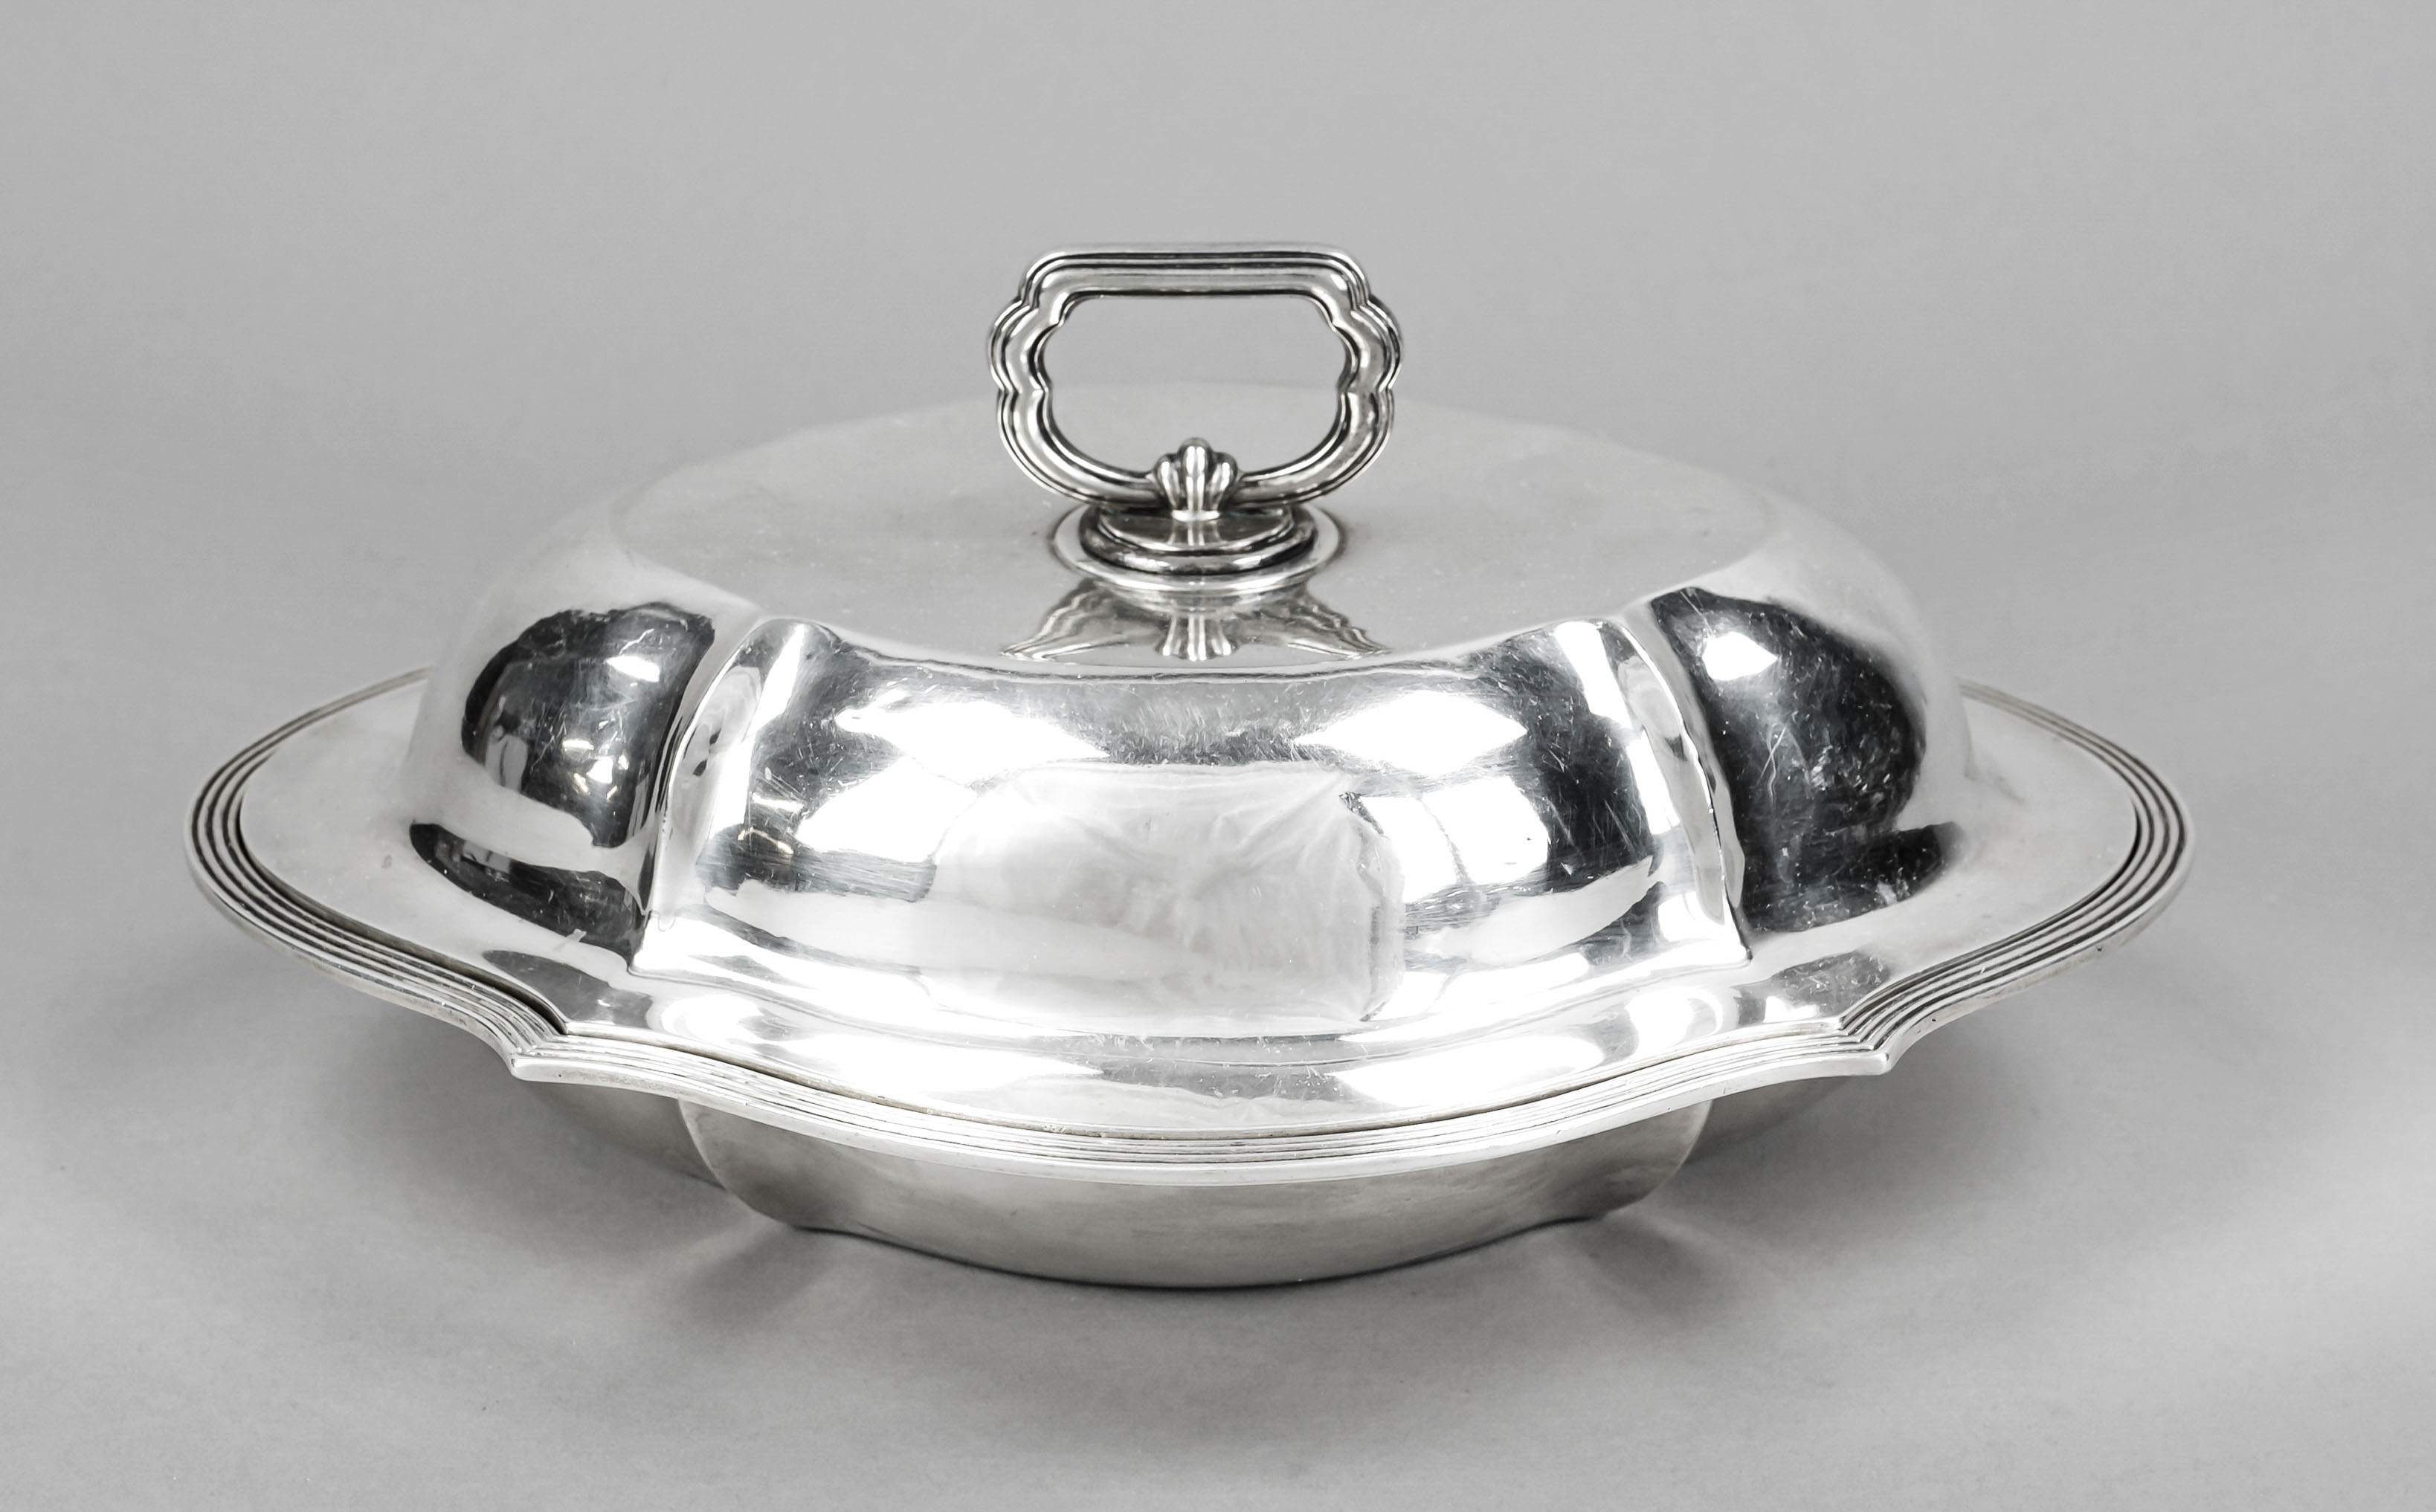 Oval warming dish, USA, c. 1900, maker's mark J. E. Caldwell & Co., Philadelphia, sterling silver